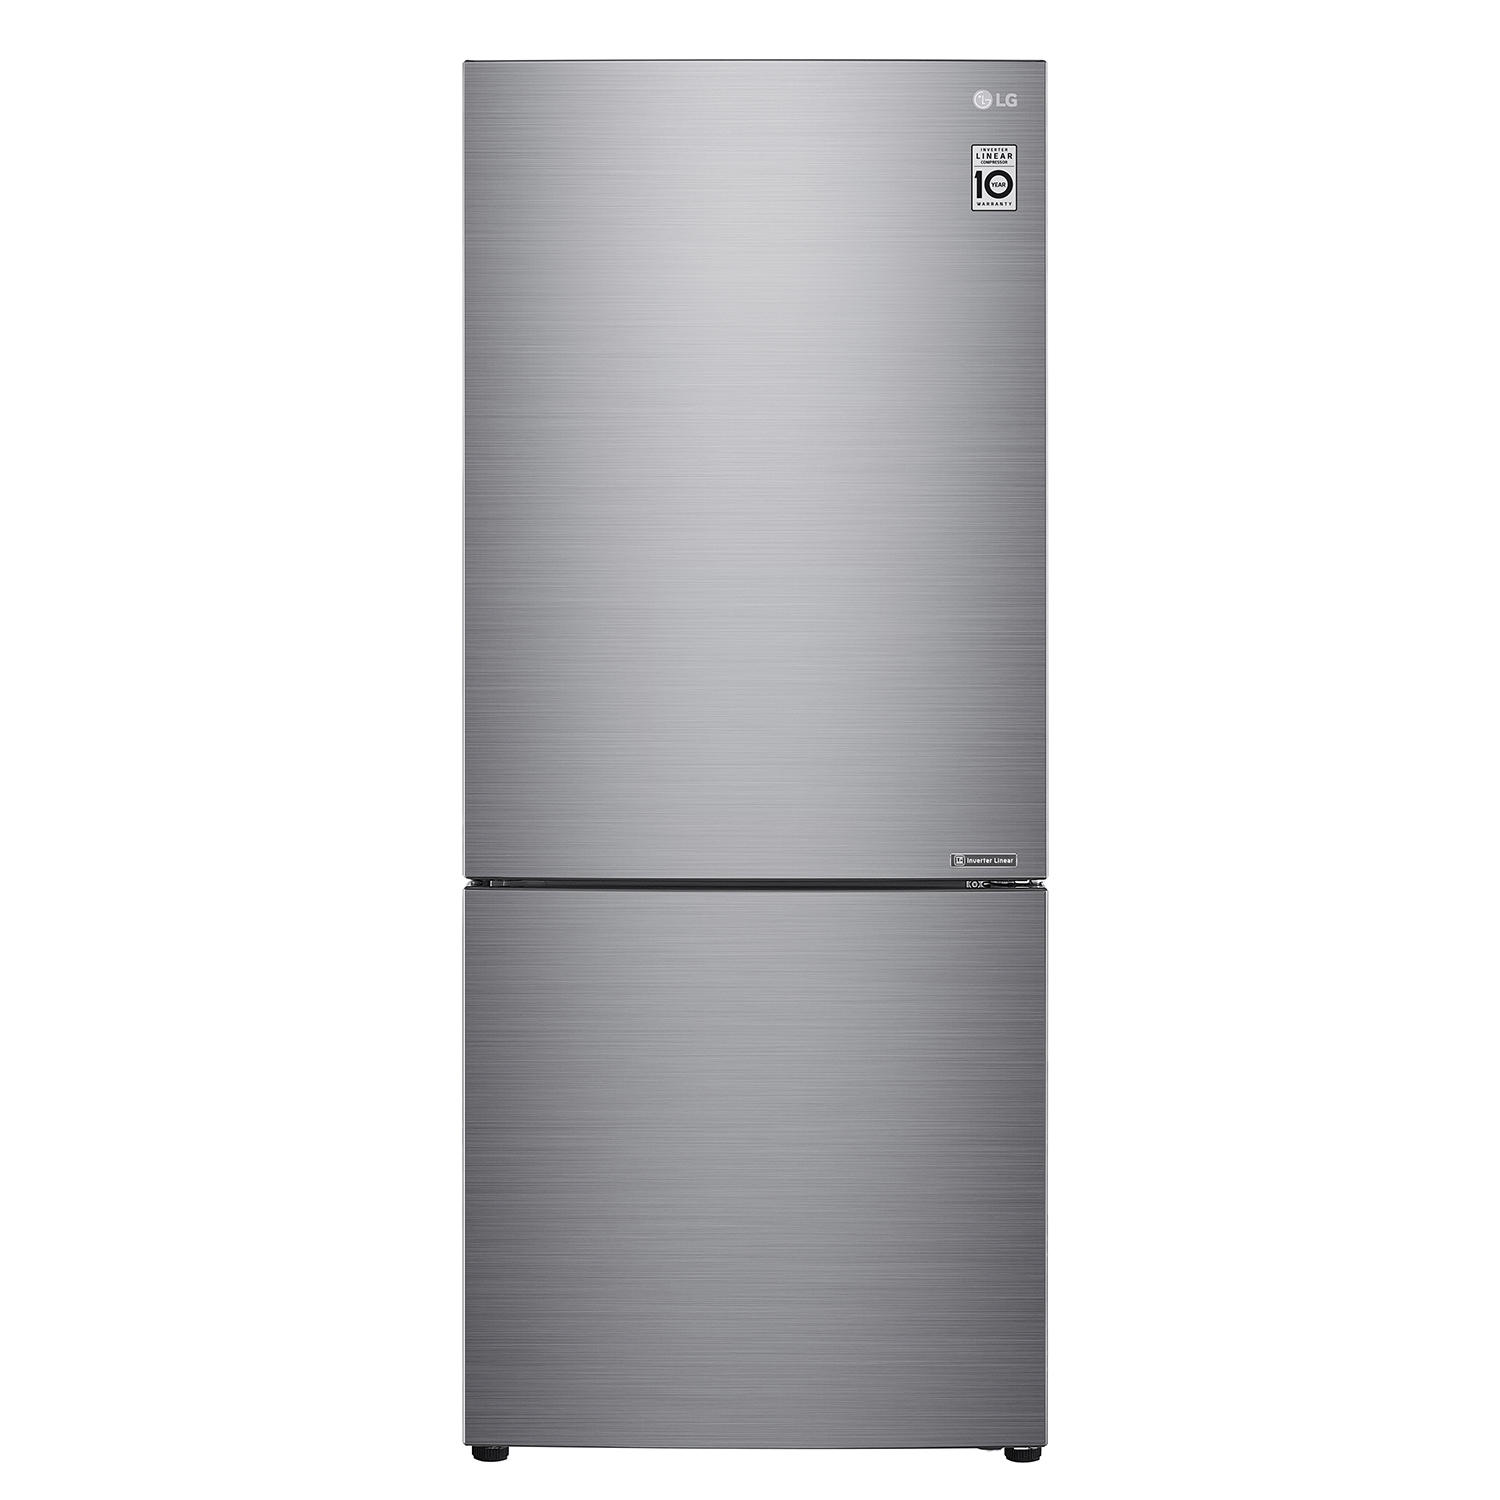 LG 15 cu. ft. Bottom Freezer Refrigerator